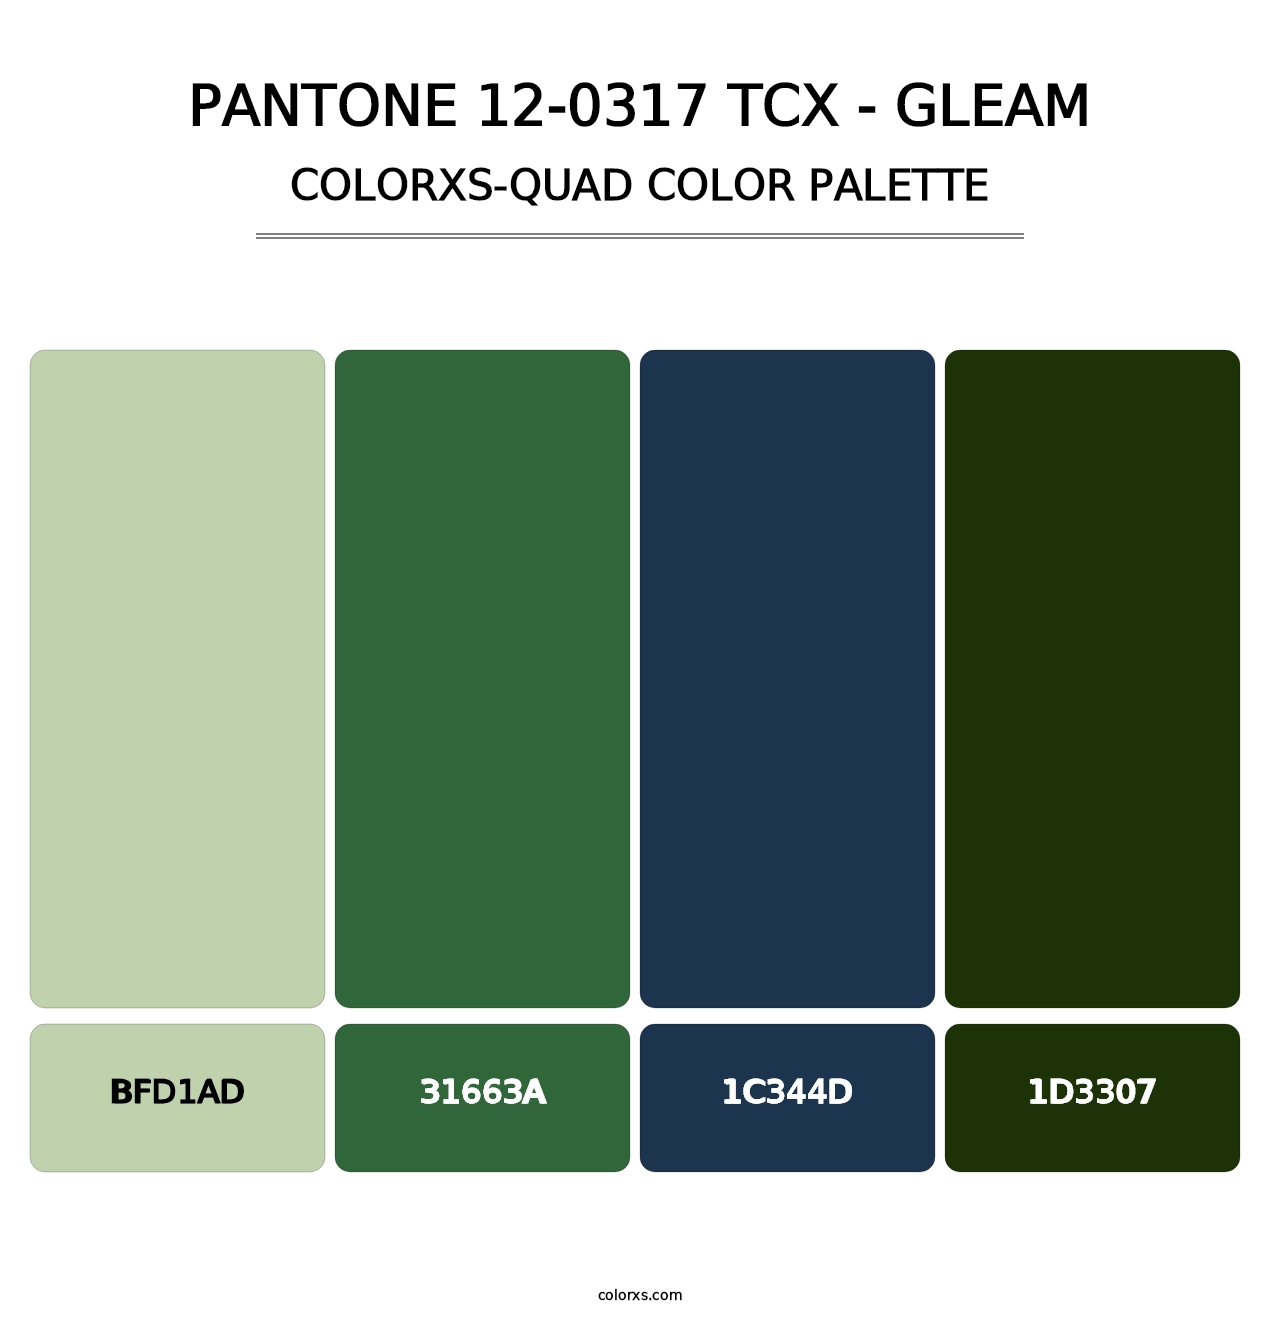 PANTONE 12-0317 TCX - Gleam - Colorxs Quad Palette